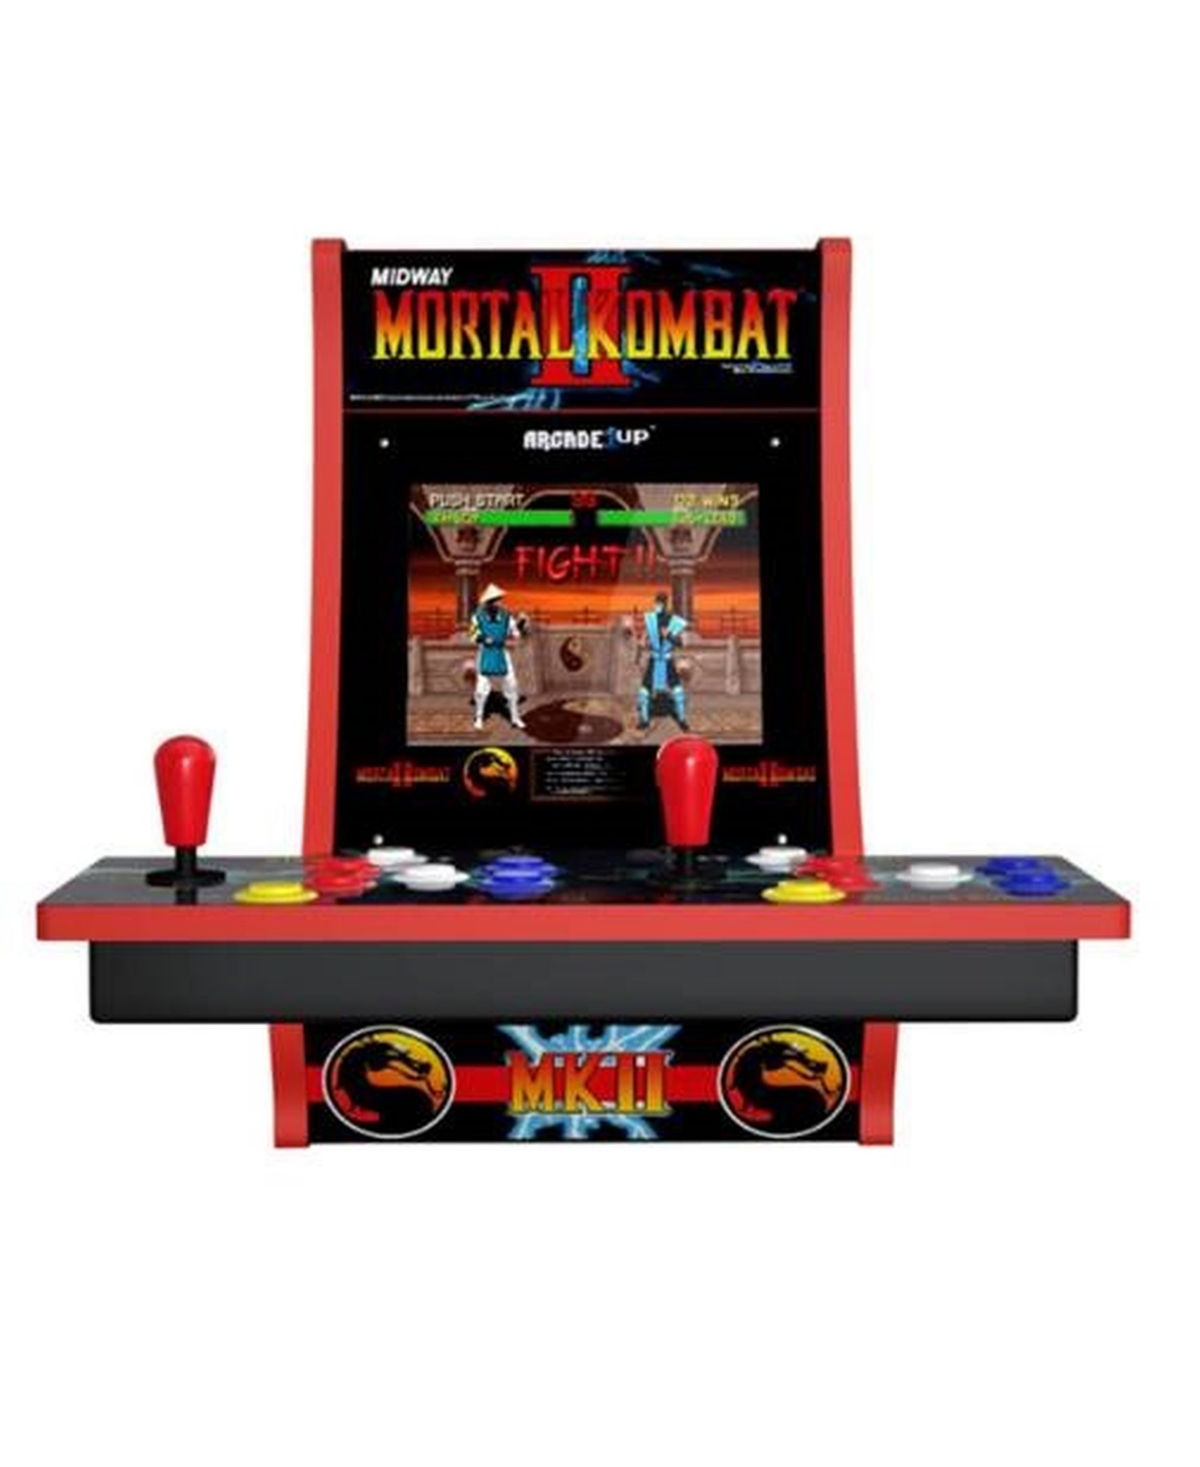 Arcade 1UP Mortal Kombat Ii 2 Player Countercade Arcade Game